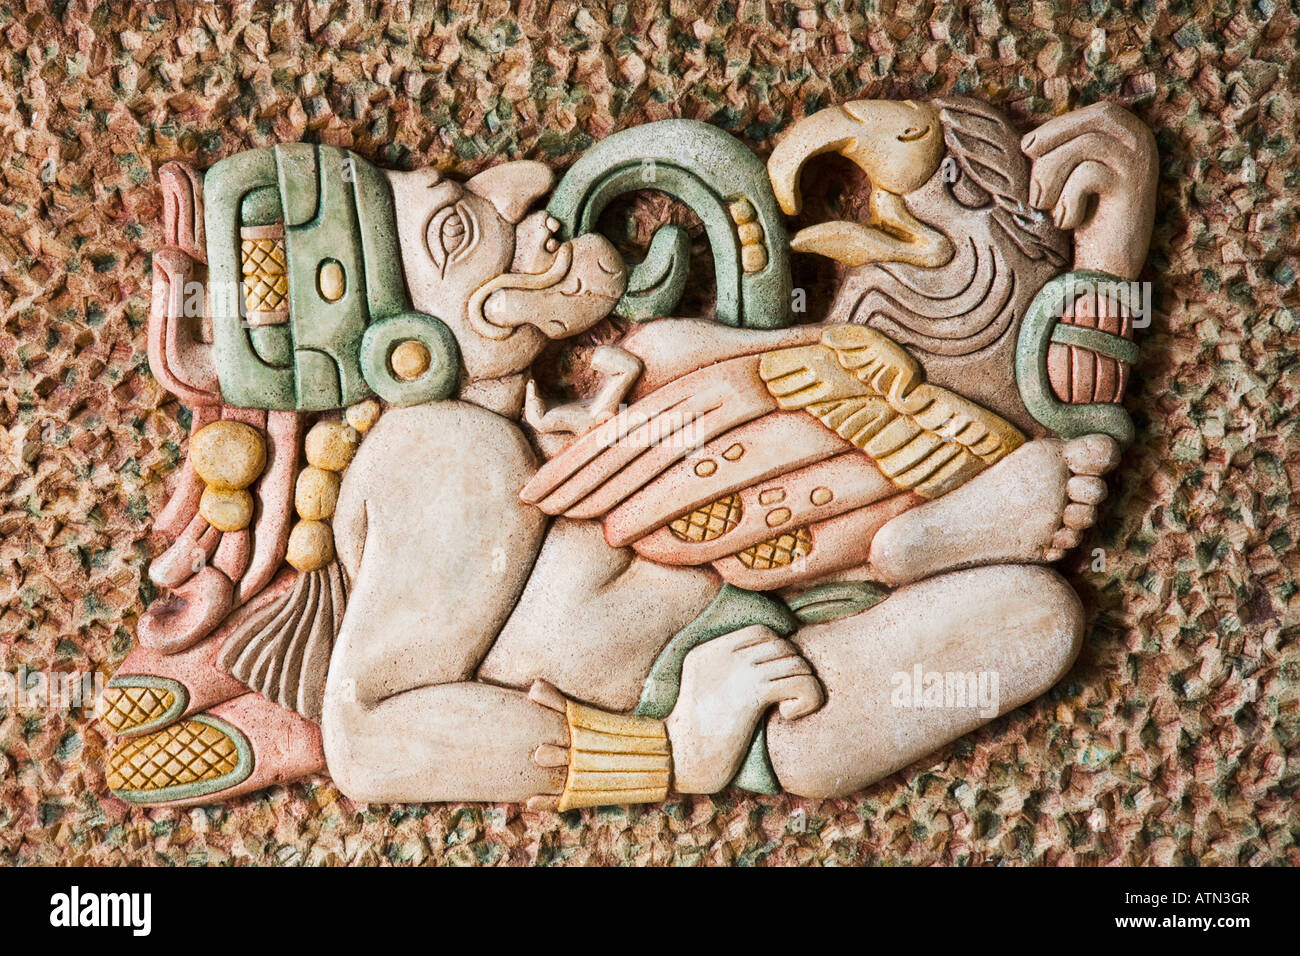 Replica of Mayan art in the Yucatan Peninsula of Mexico Stock Photo